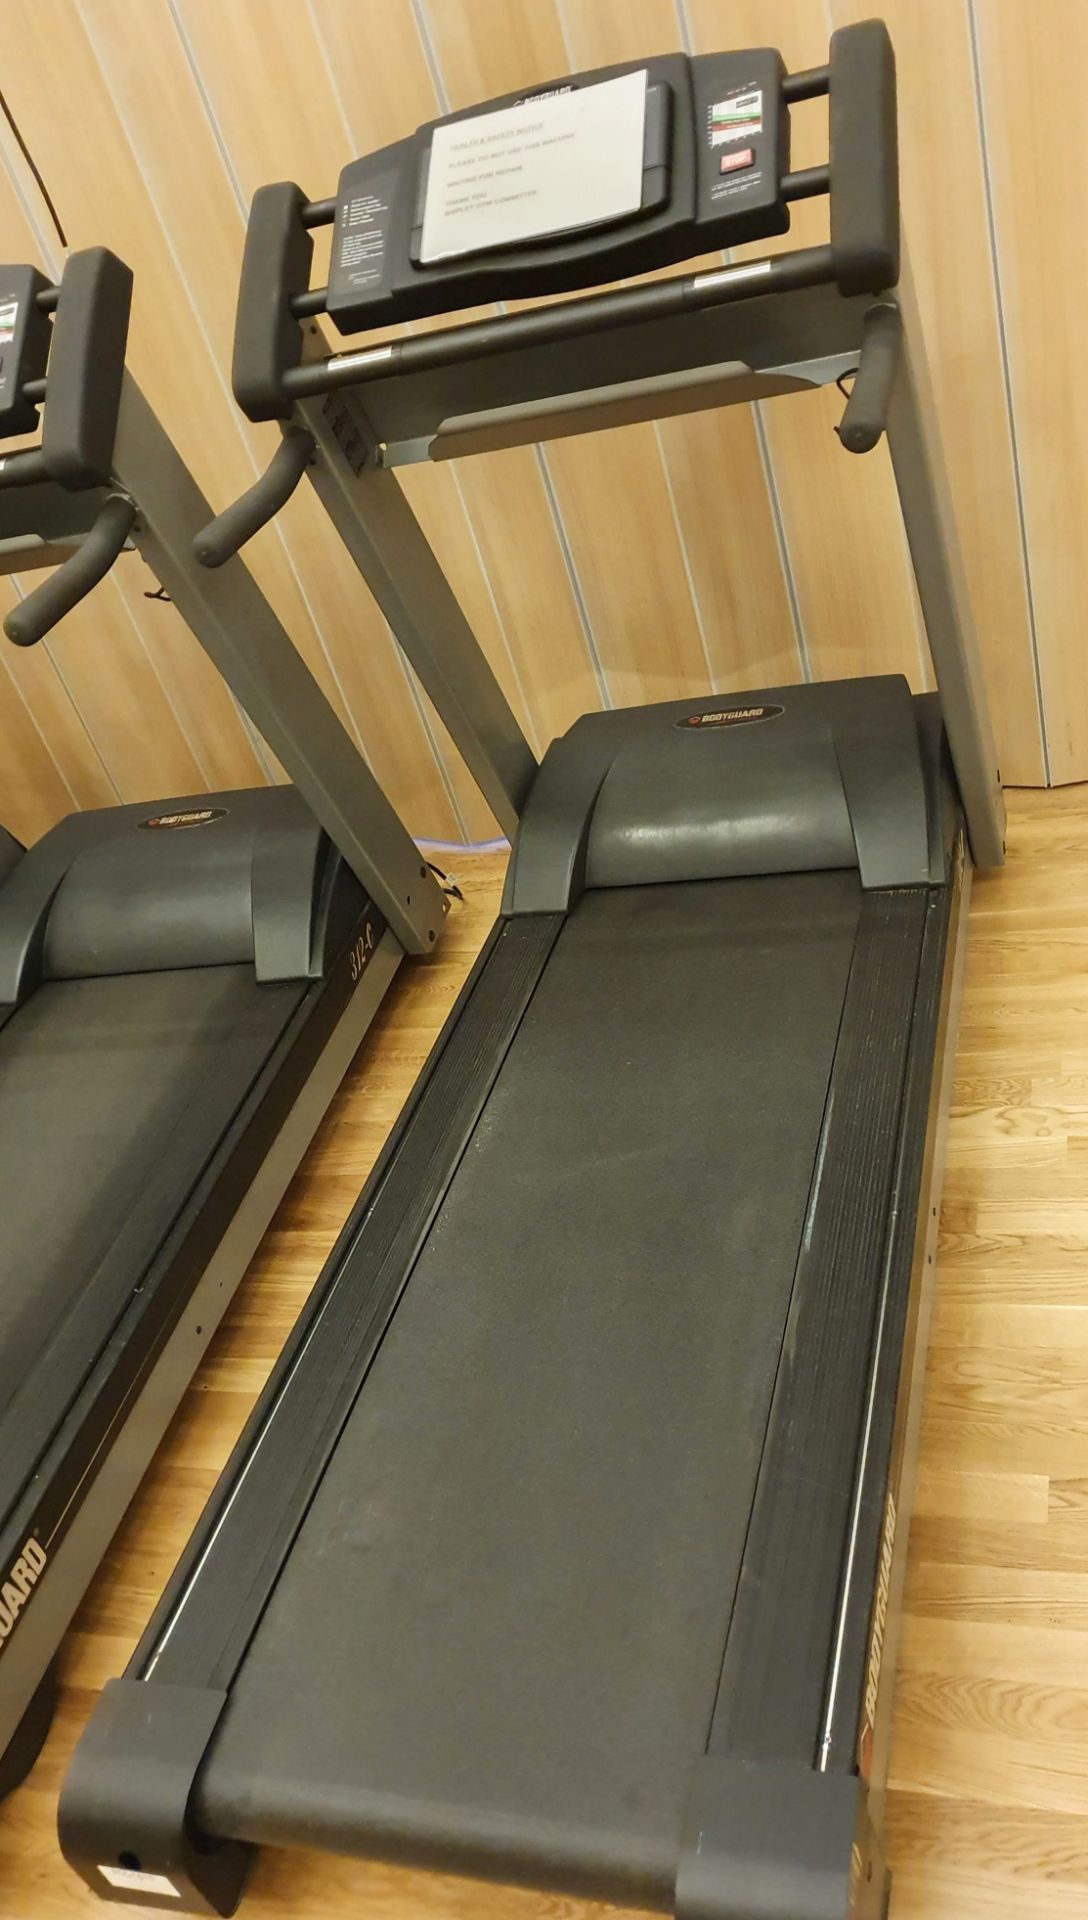 1 x Bodyguard 312C Treadmill Running Machine - Please Read Description  - CL552 - Location: West